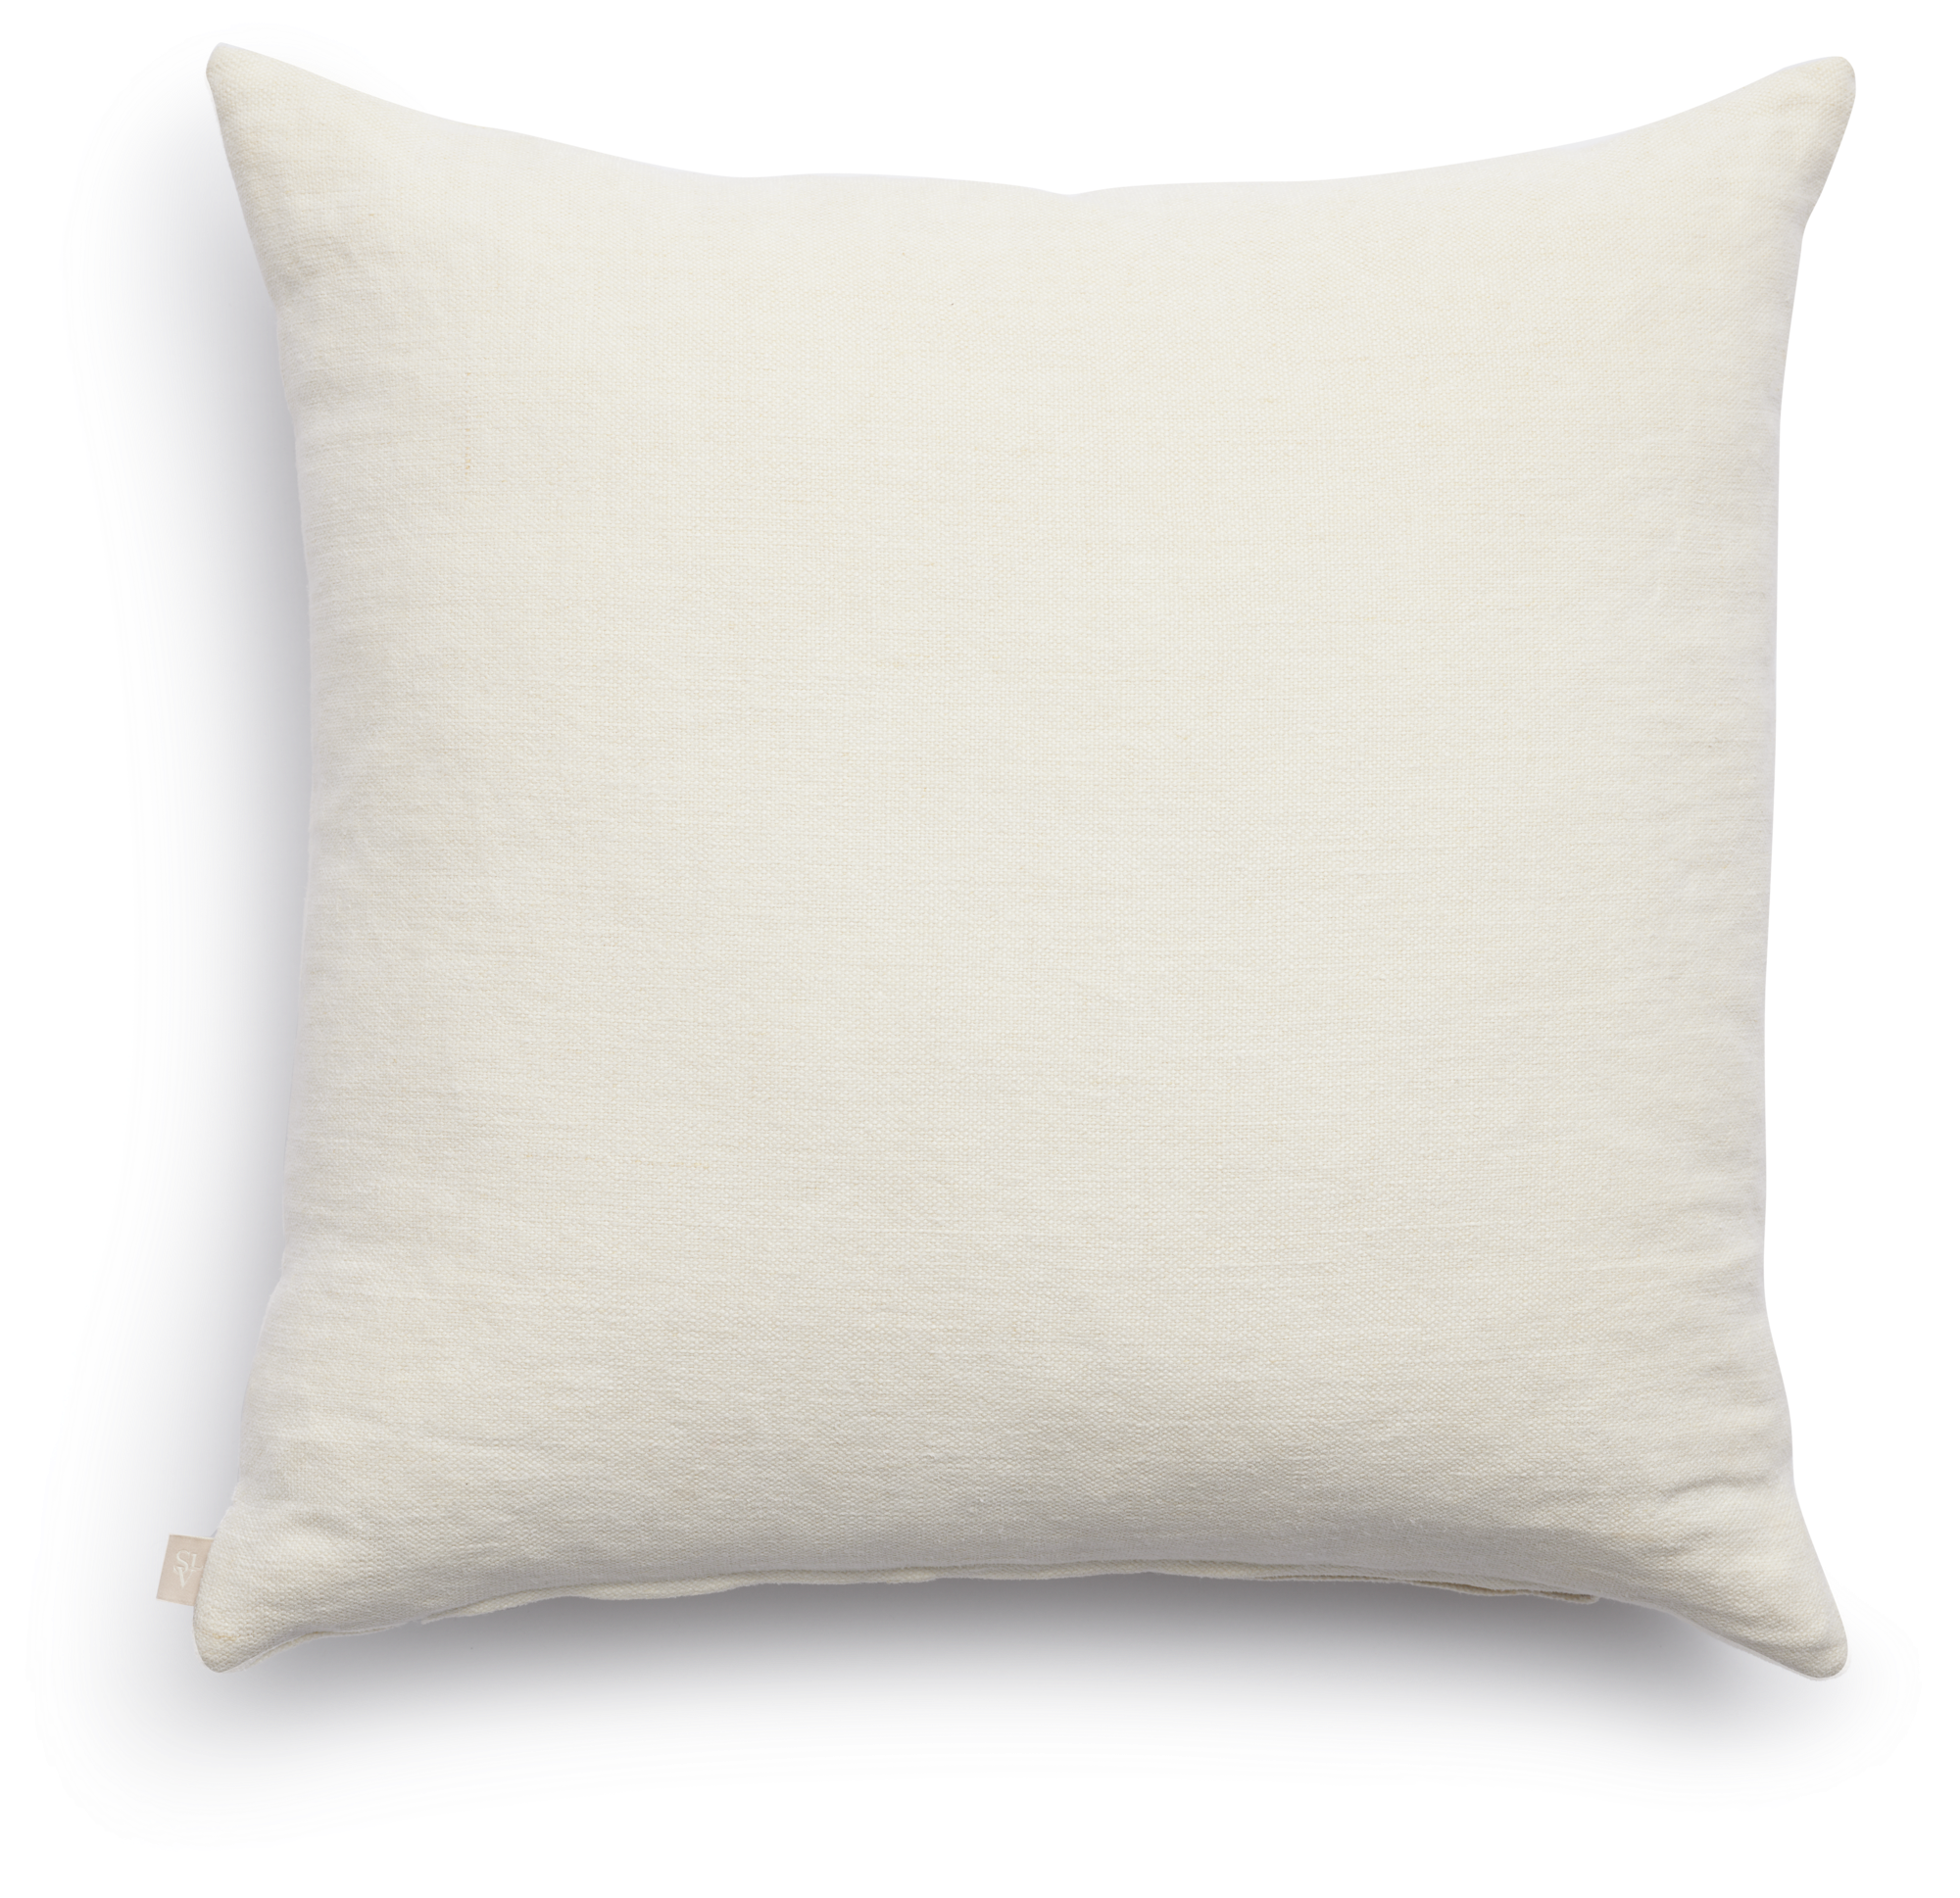 Isi decorative pillow